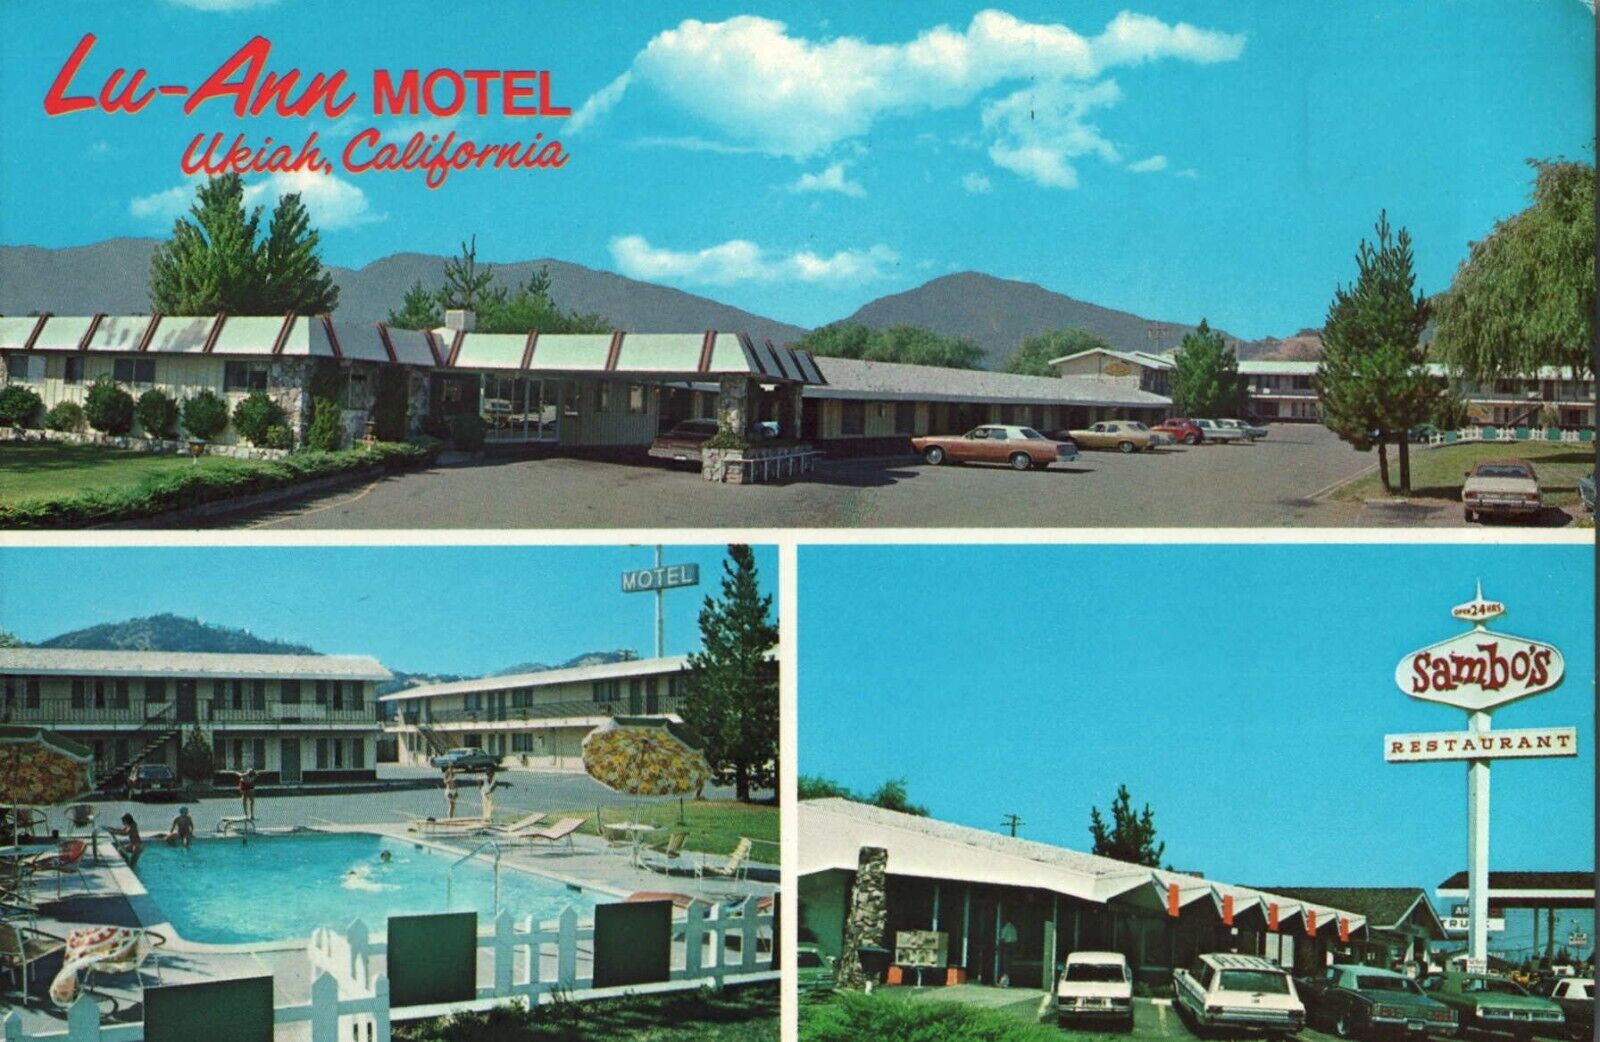 Lu-Ann Motel & Sambo’s Restaurant 1970s Ukiah California Vintage Postcard